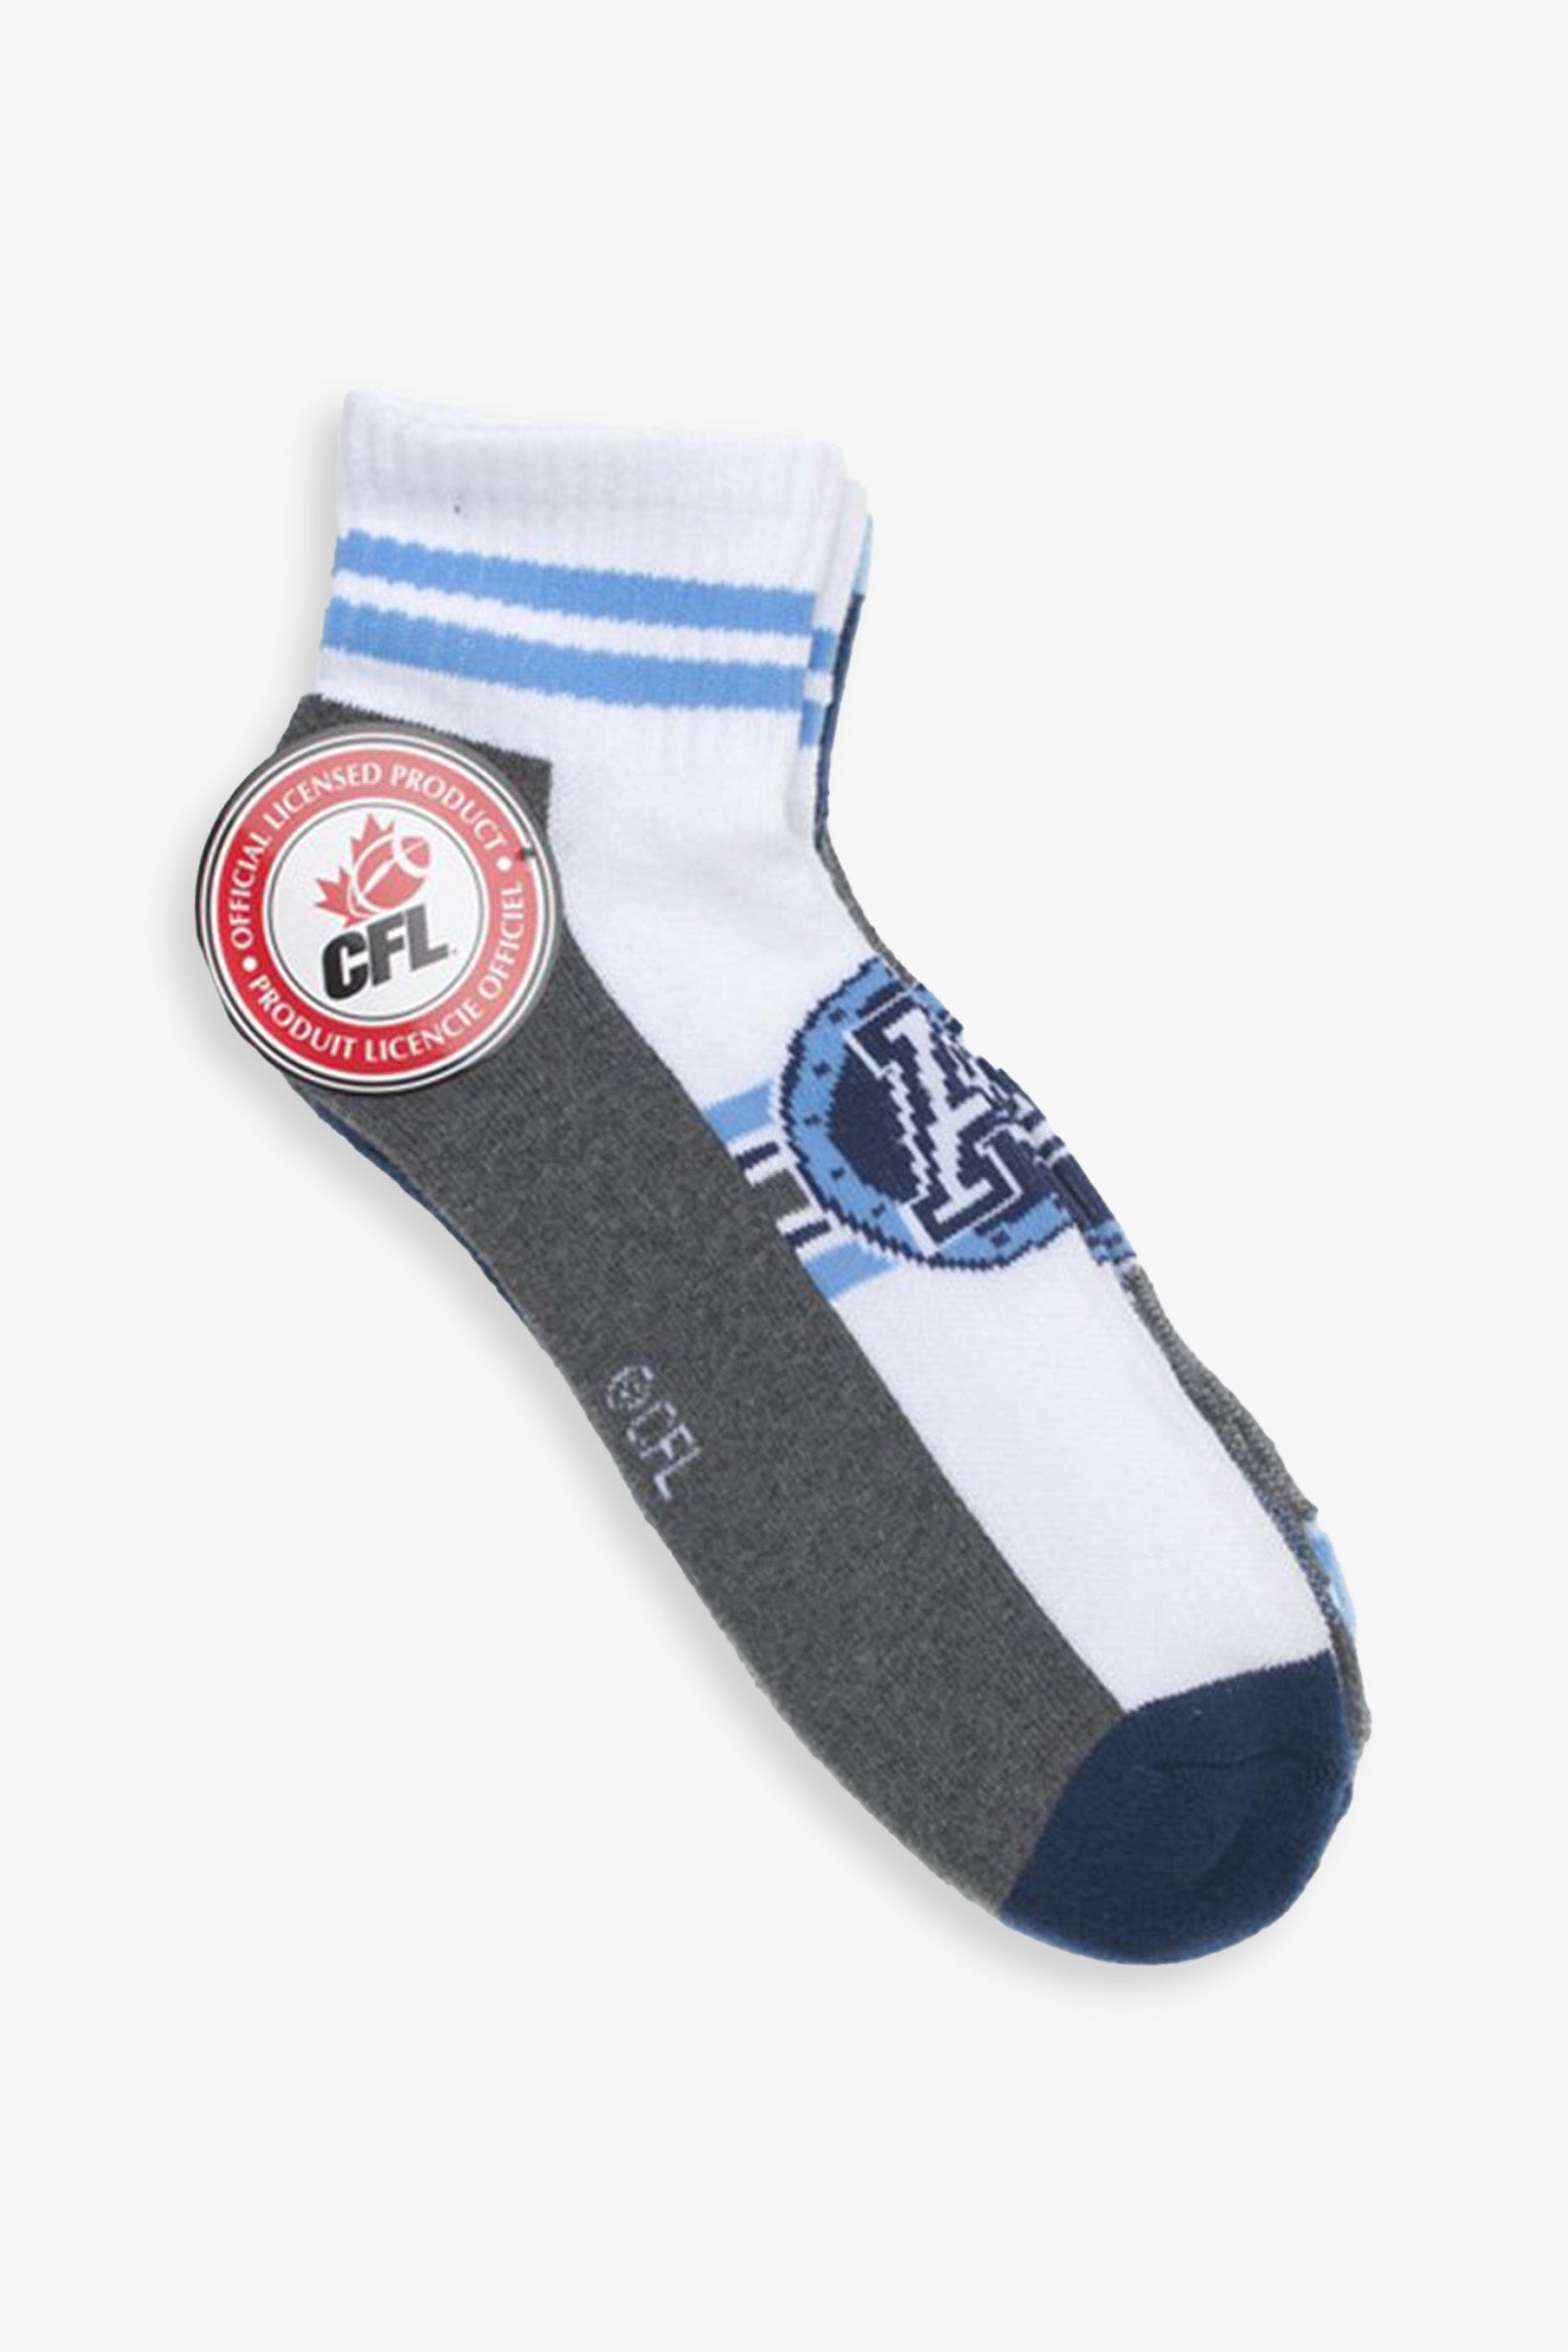 Gertex CFL Men's Toronto Argonauts 3-Pack Quarter Socks